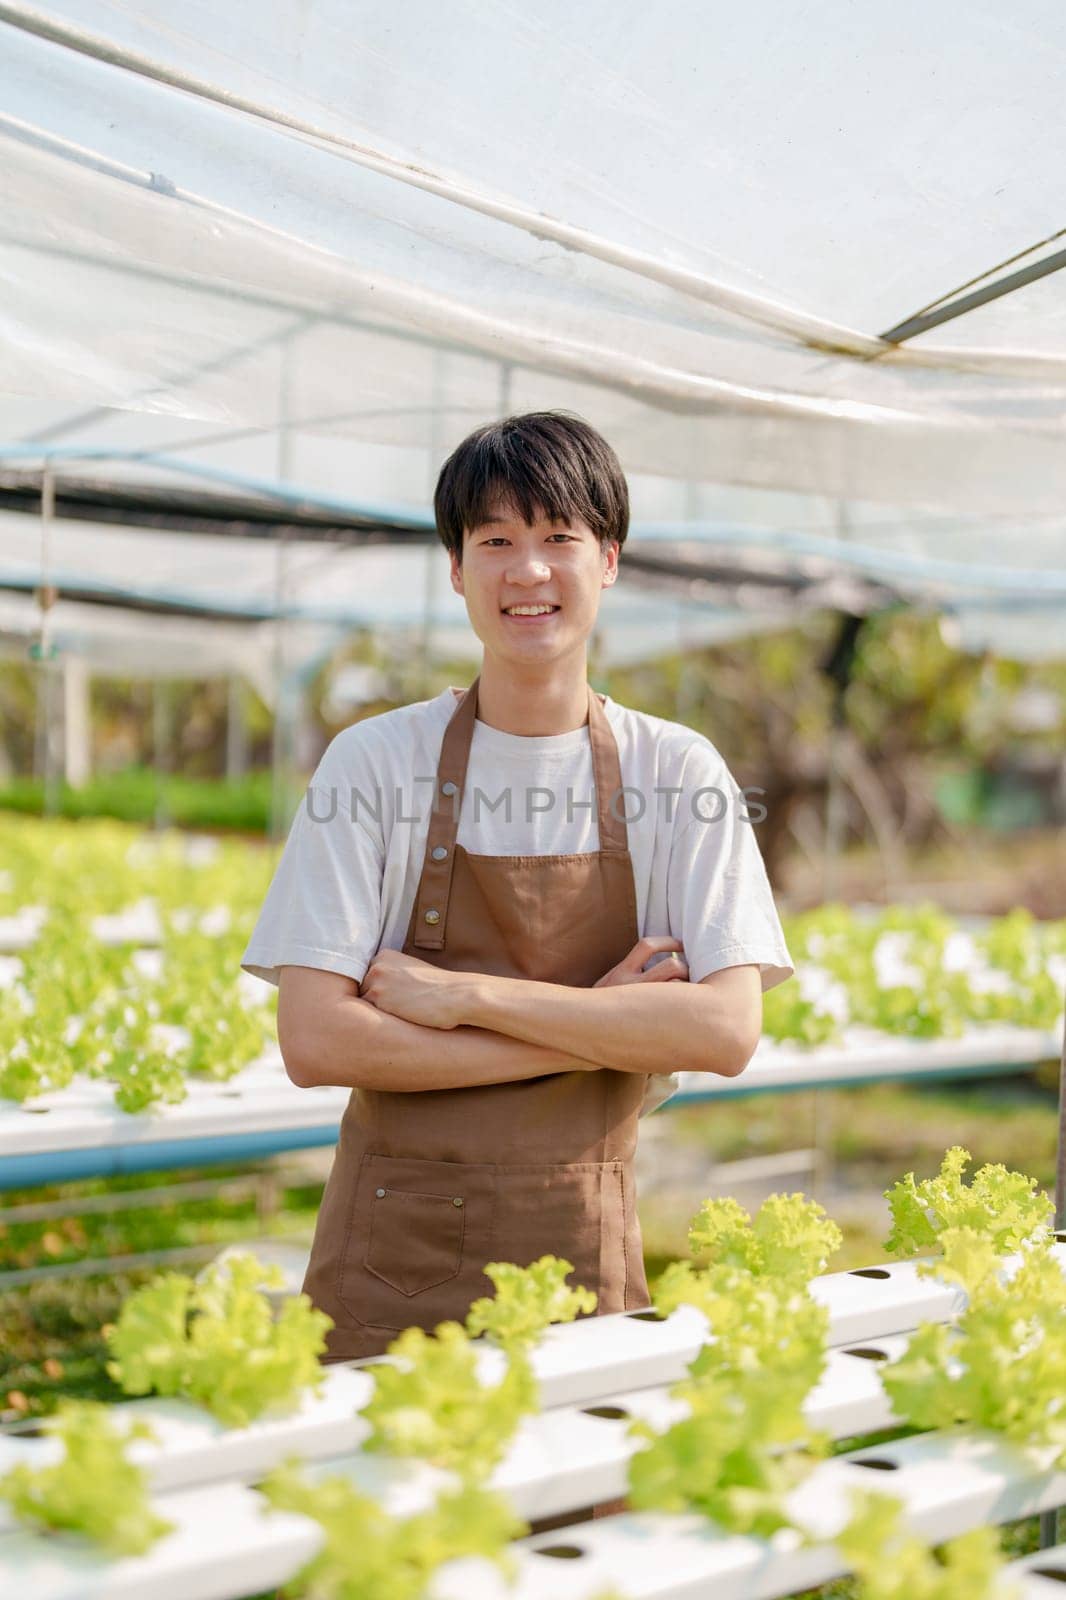 man Farmer harvesting vegetable from hydroponics farm. Organic fresh vegetable, Farmer working with hydroponic vegetables garden